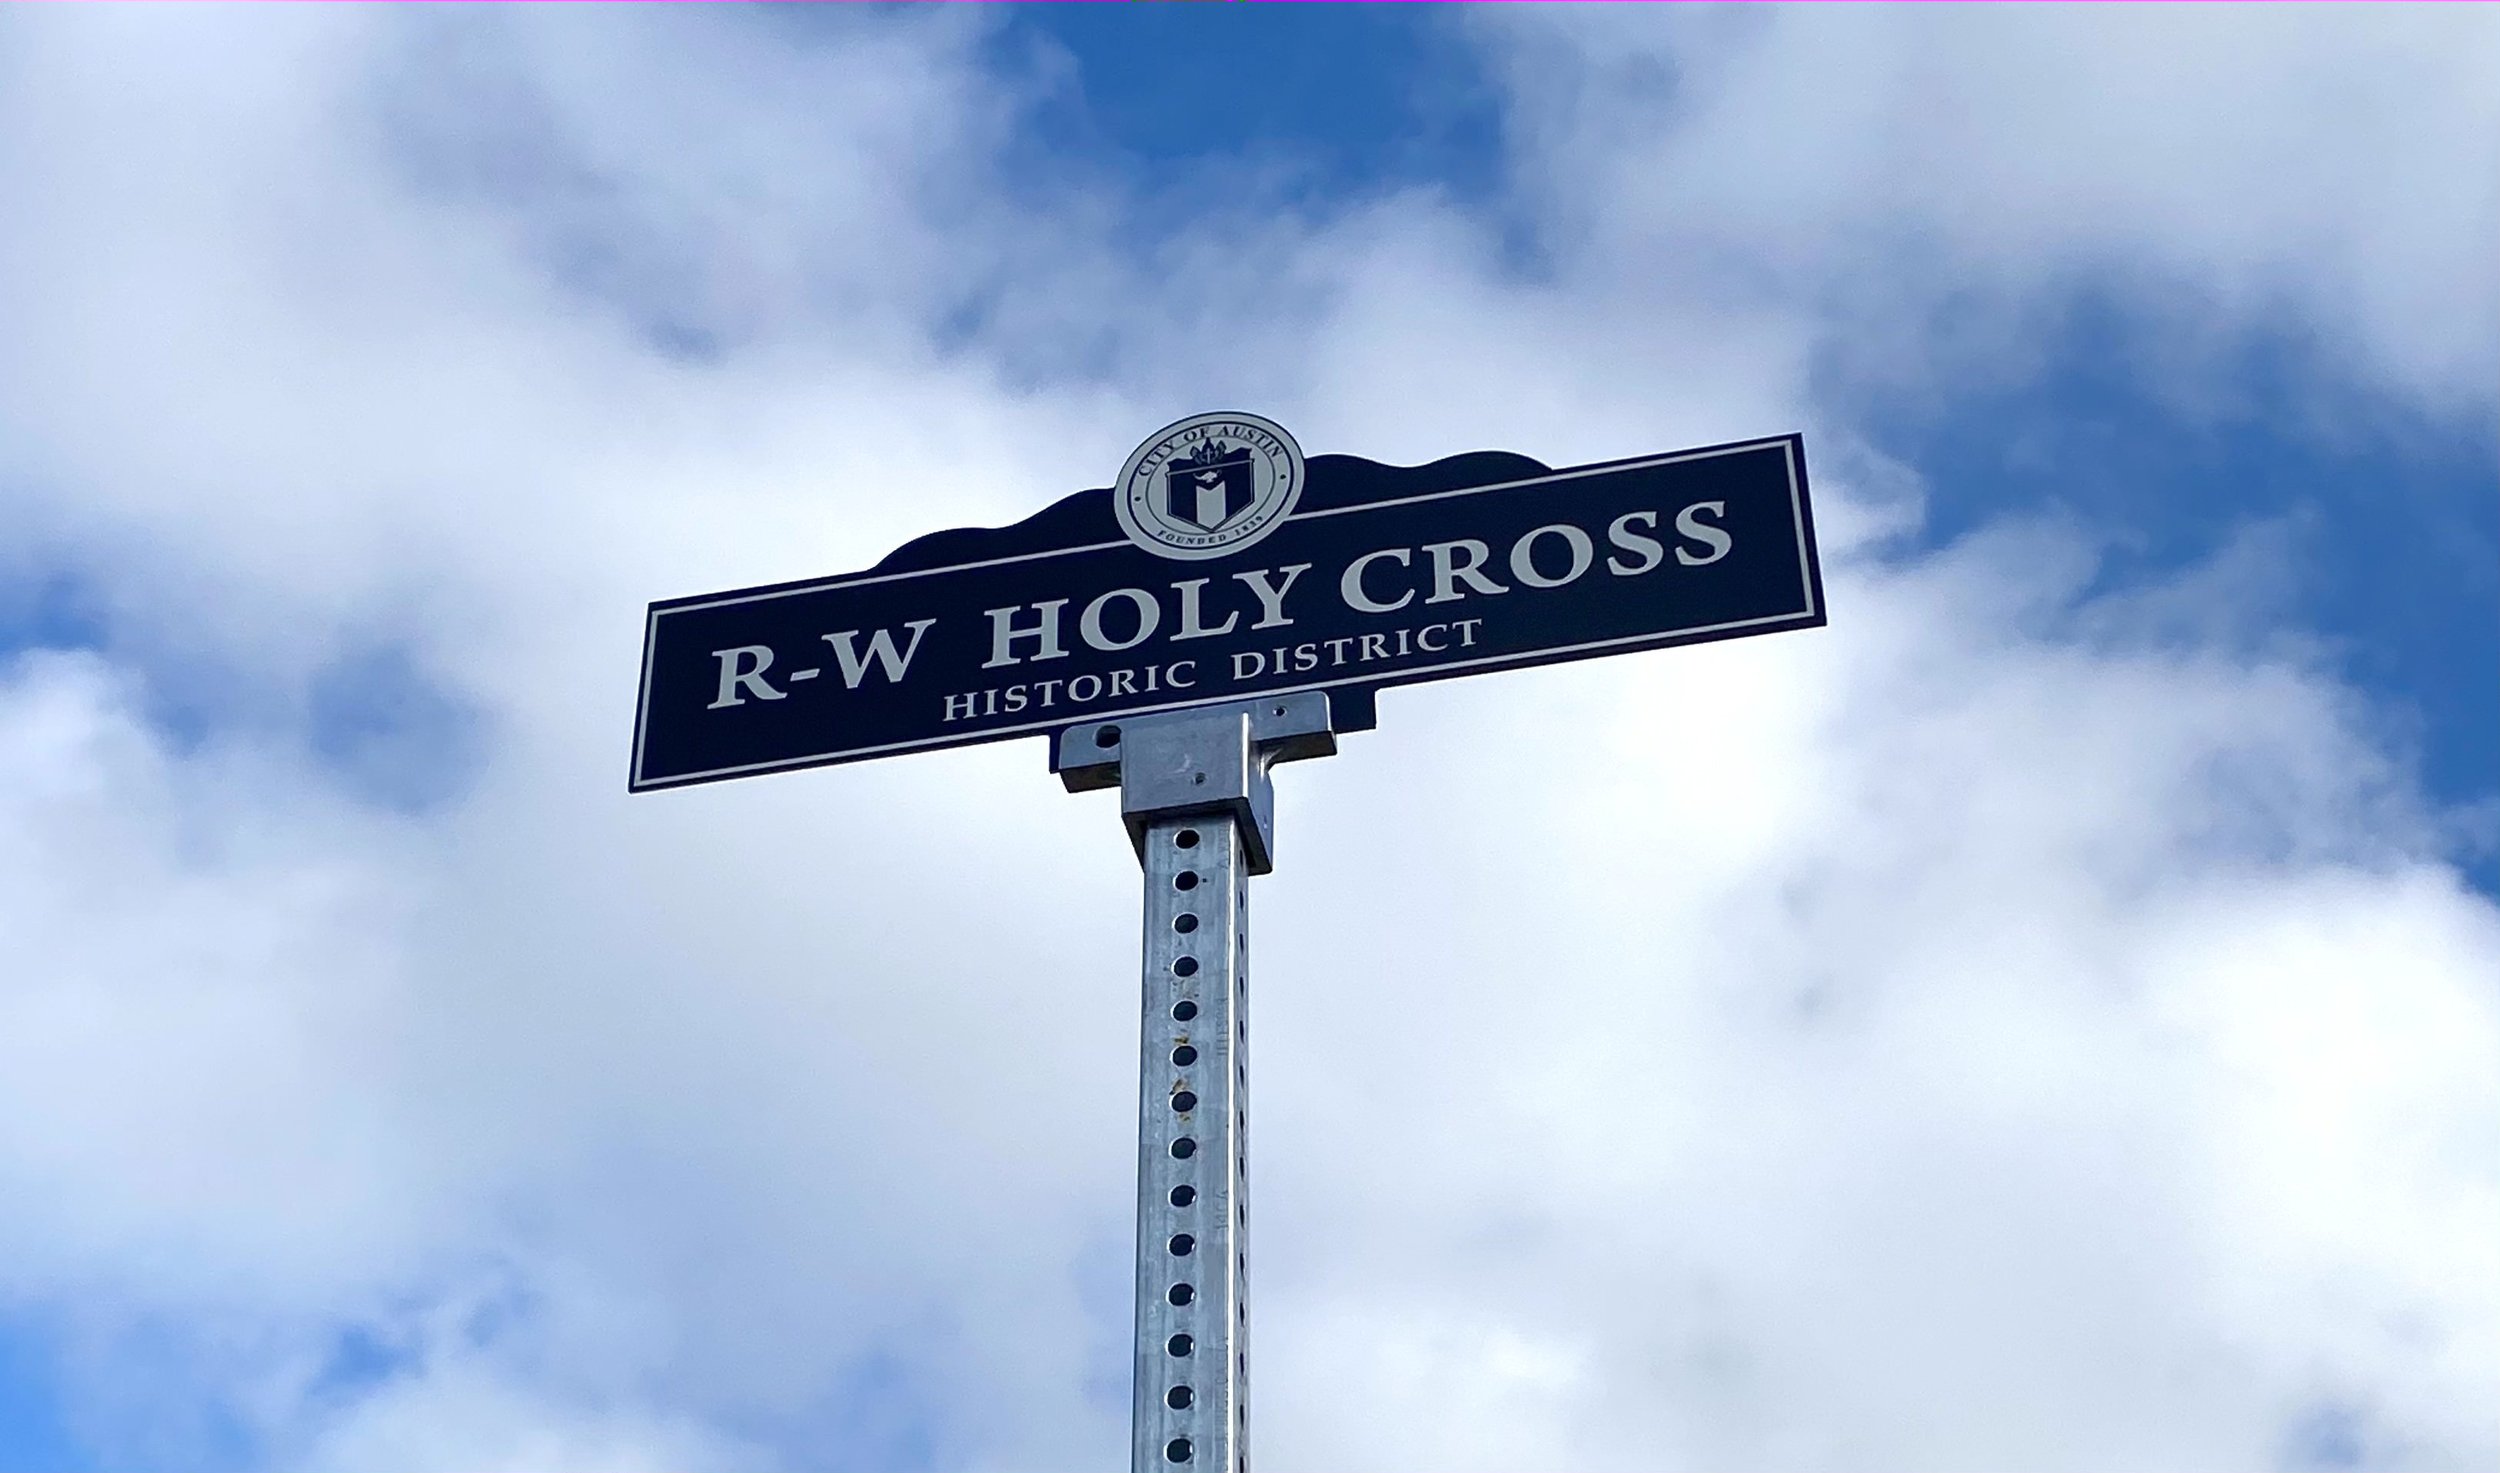 Rogers-Washington Holy Cross